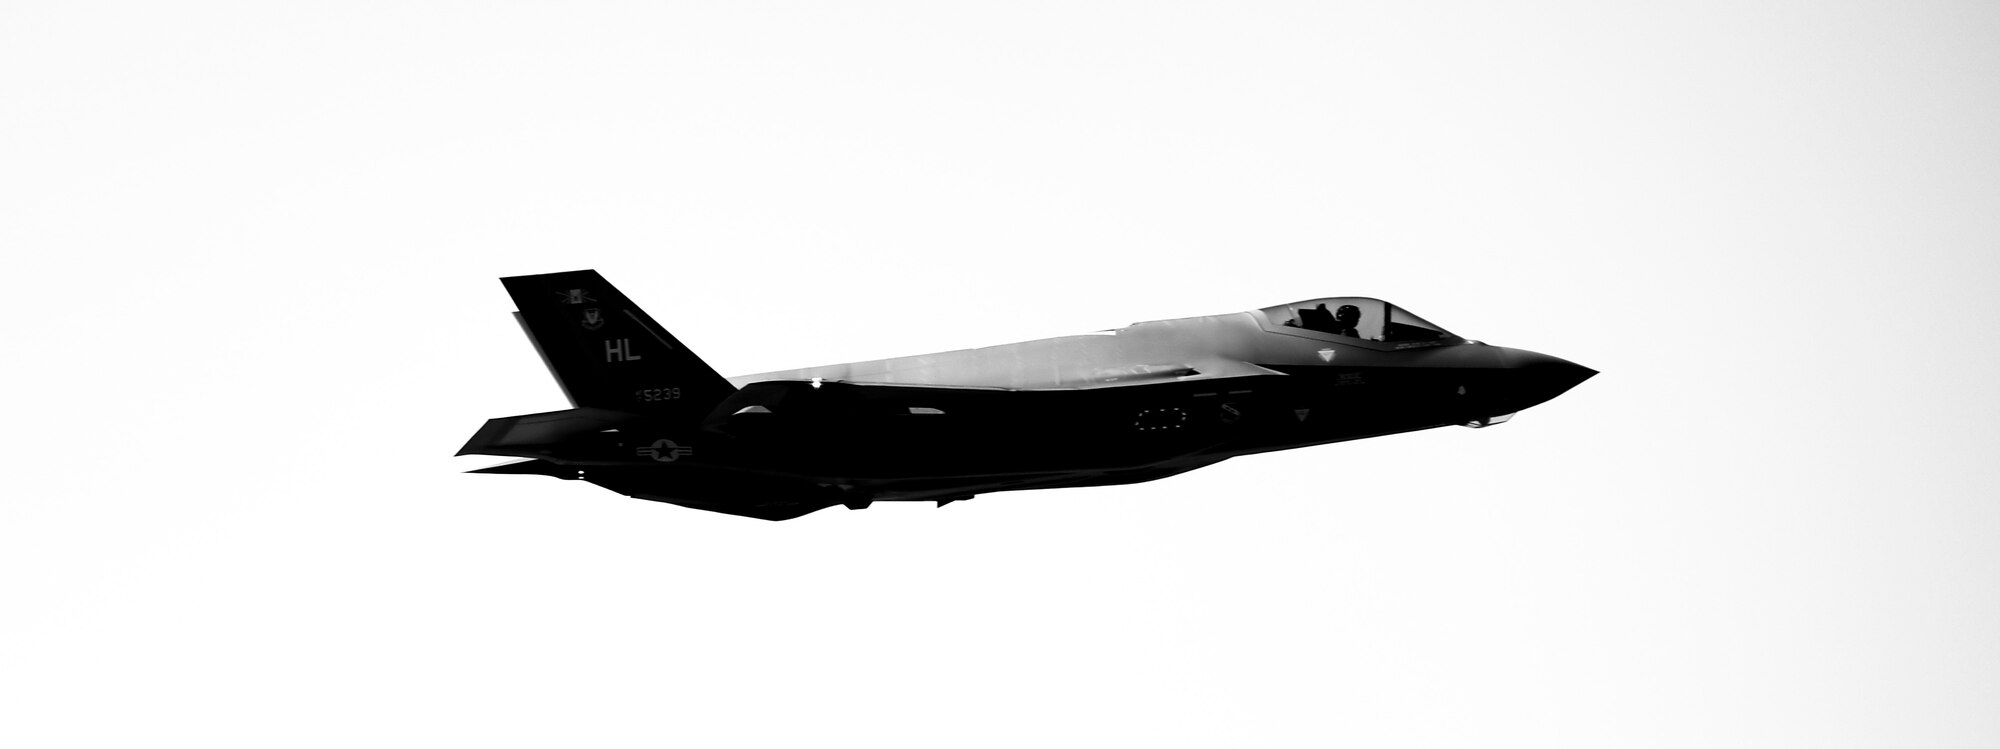 U.S. F-35A Lightning II seen in mid-aid.